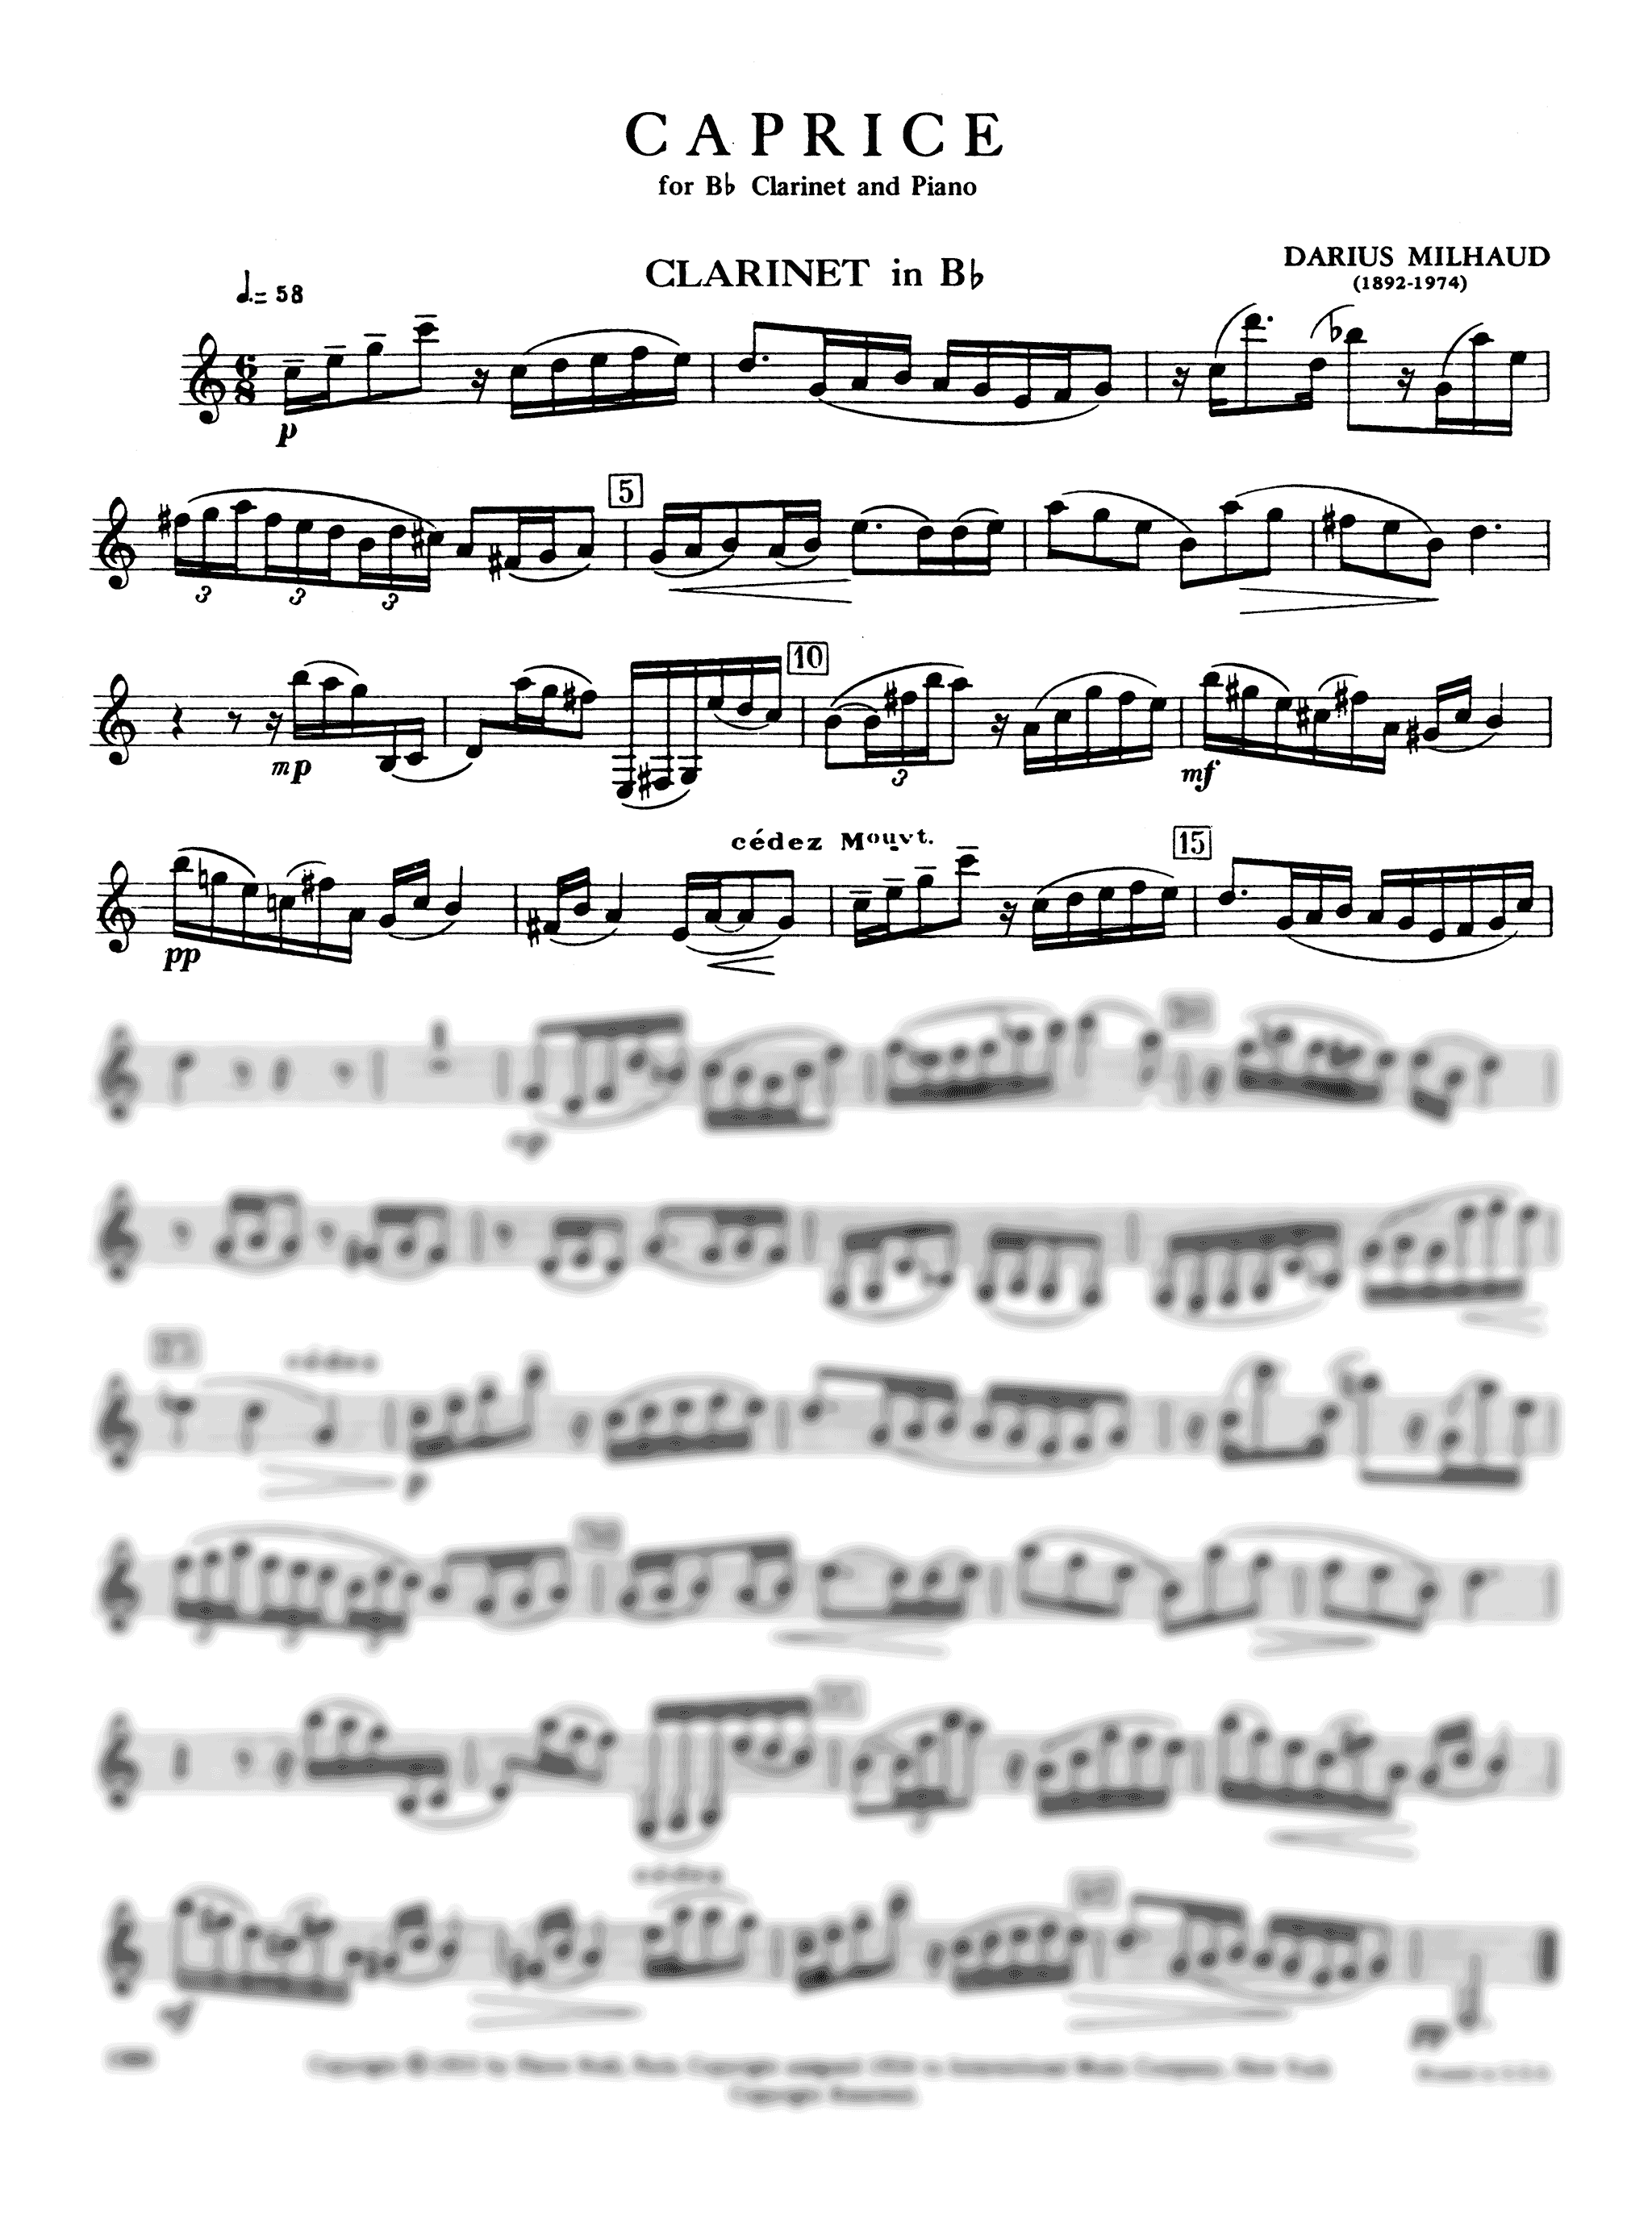 Milhaud Caprice, Op. 335 Clarinet part